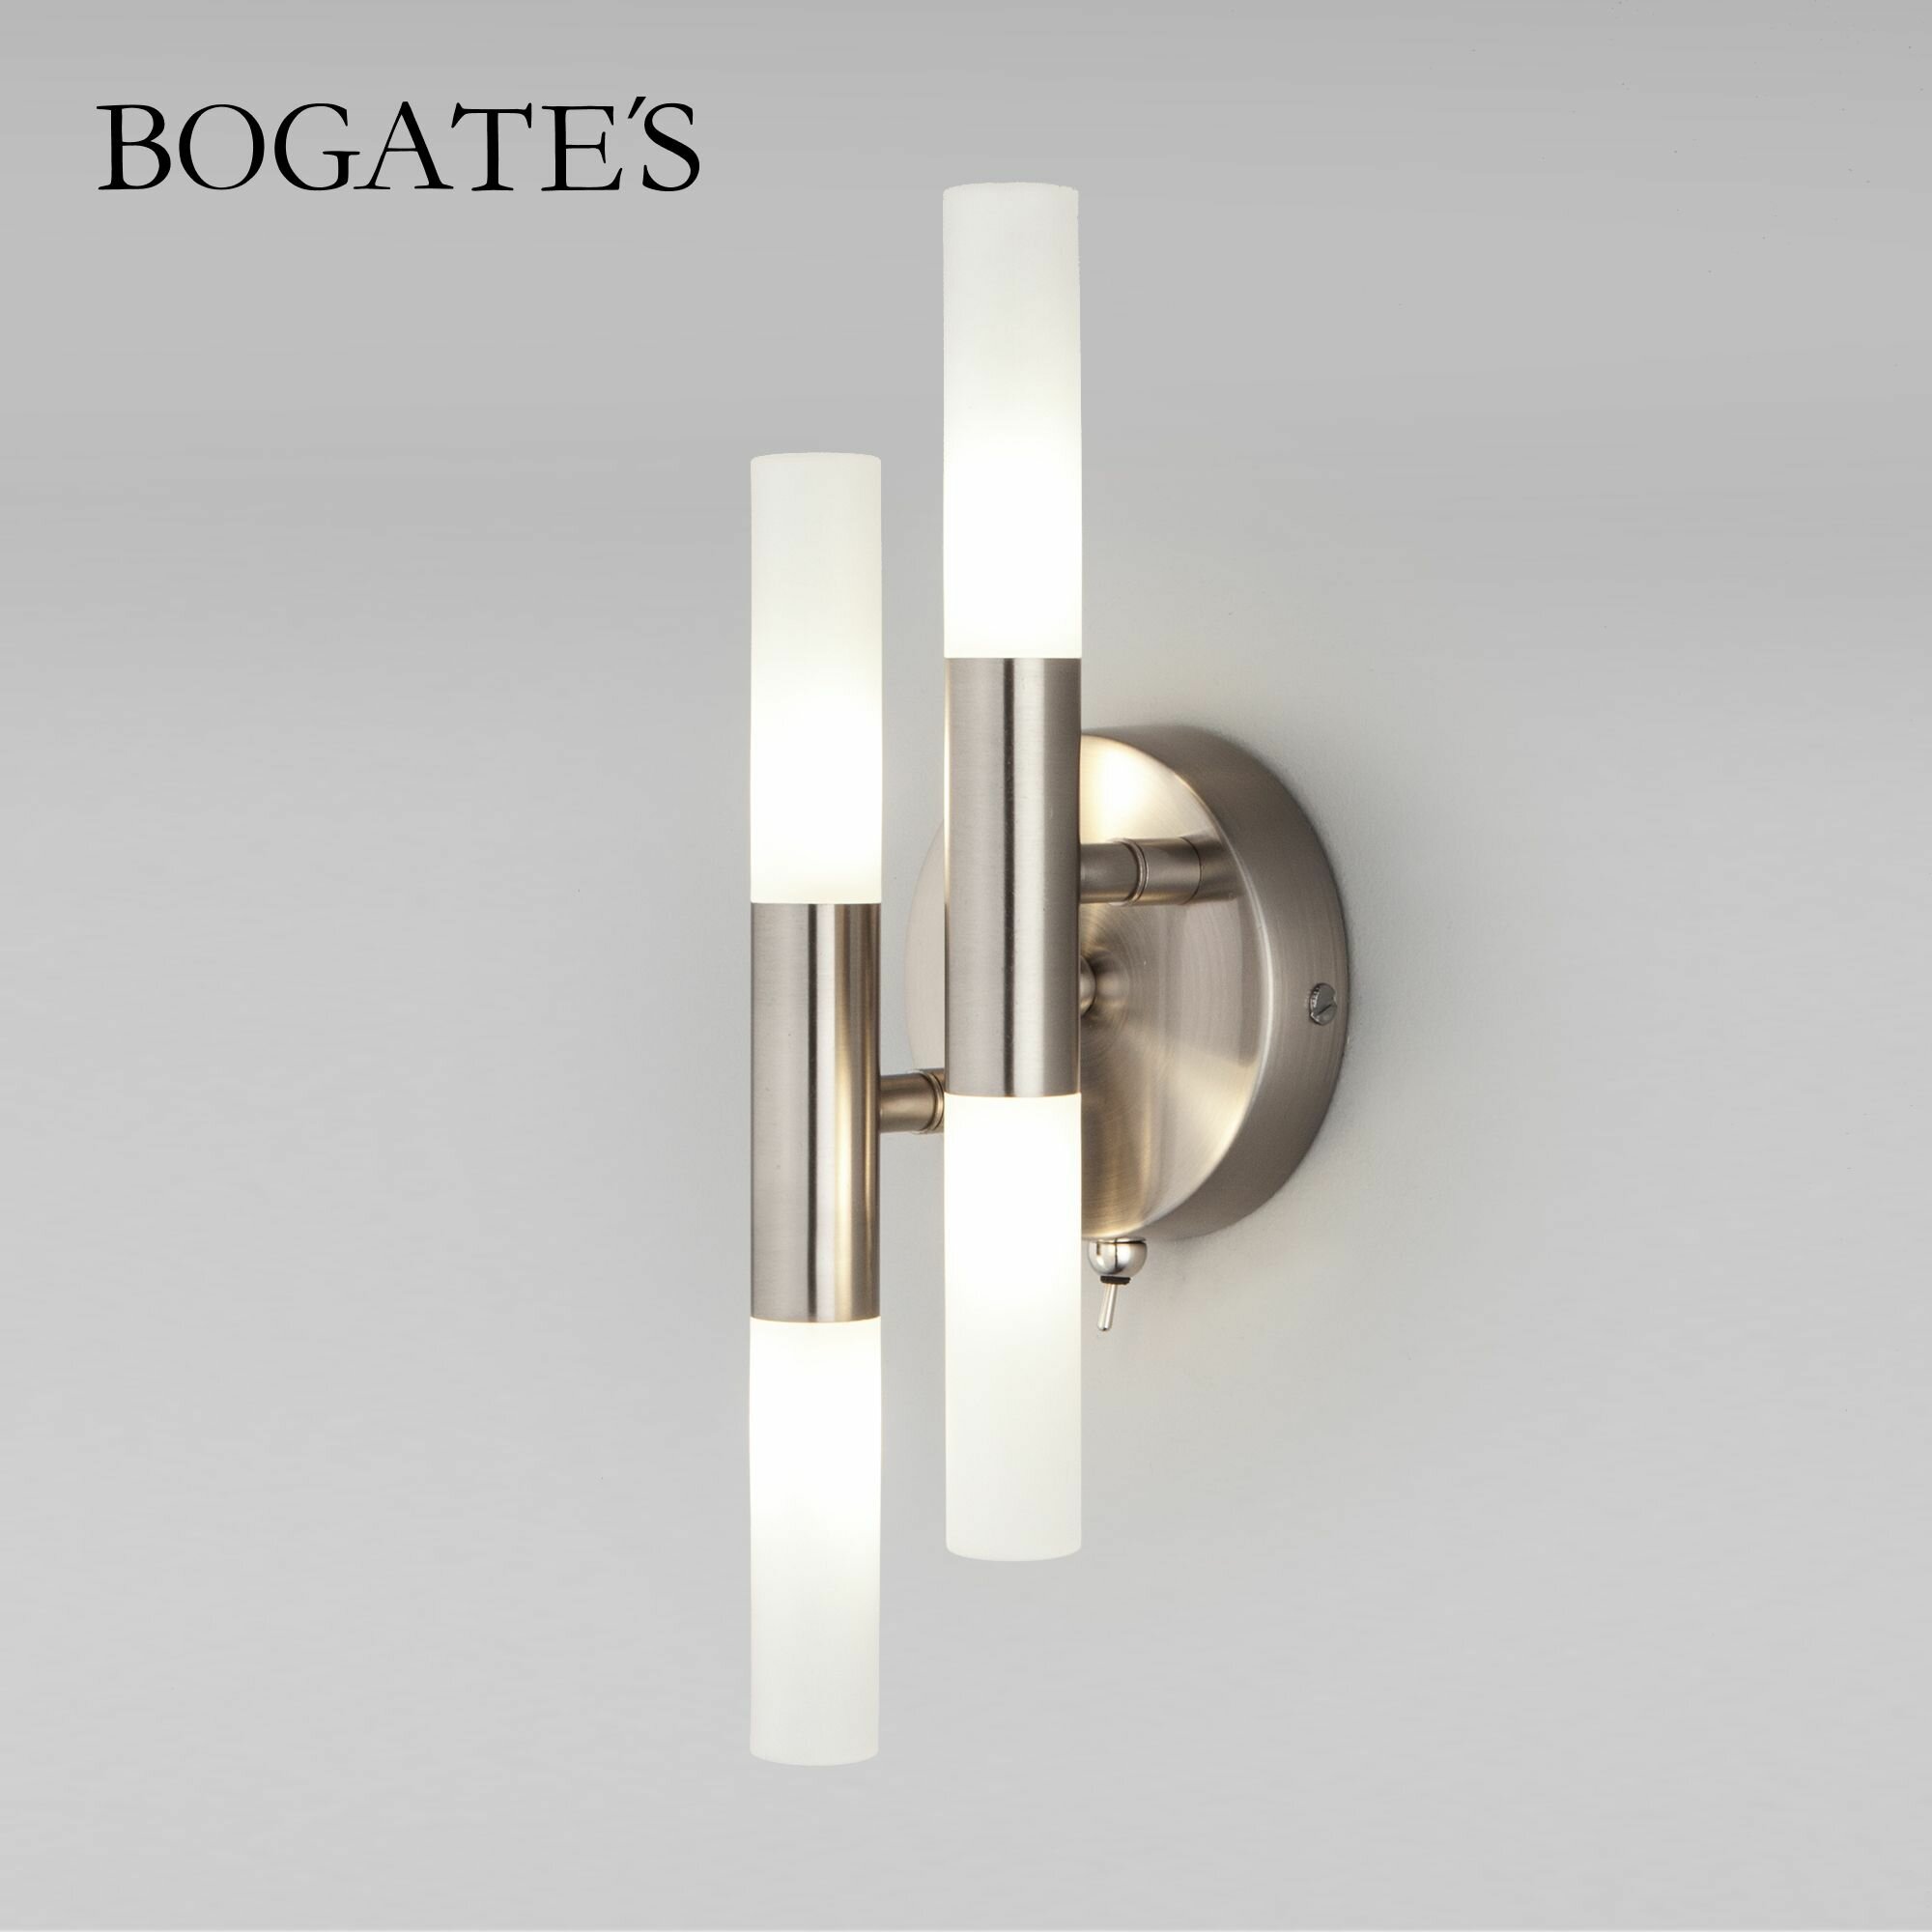 Бра Bogate's Bastone 551/4 G4